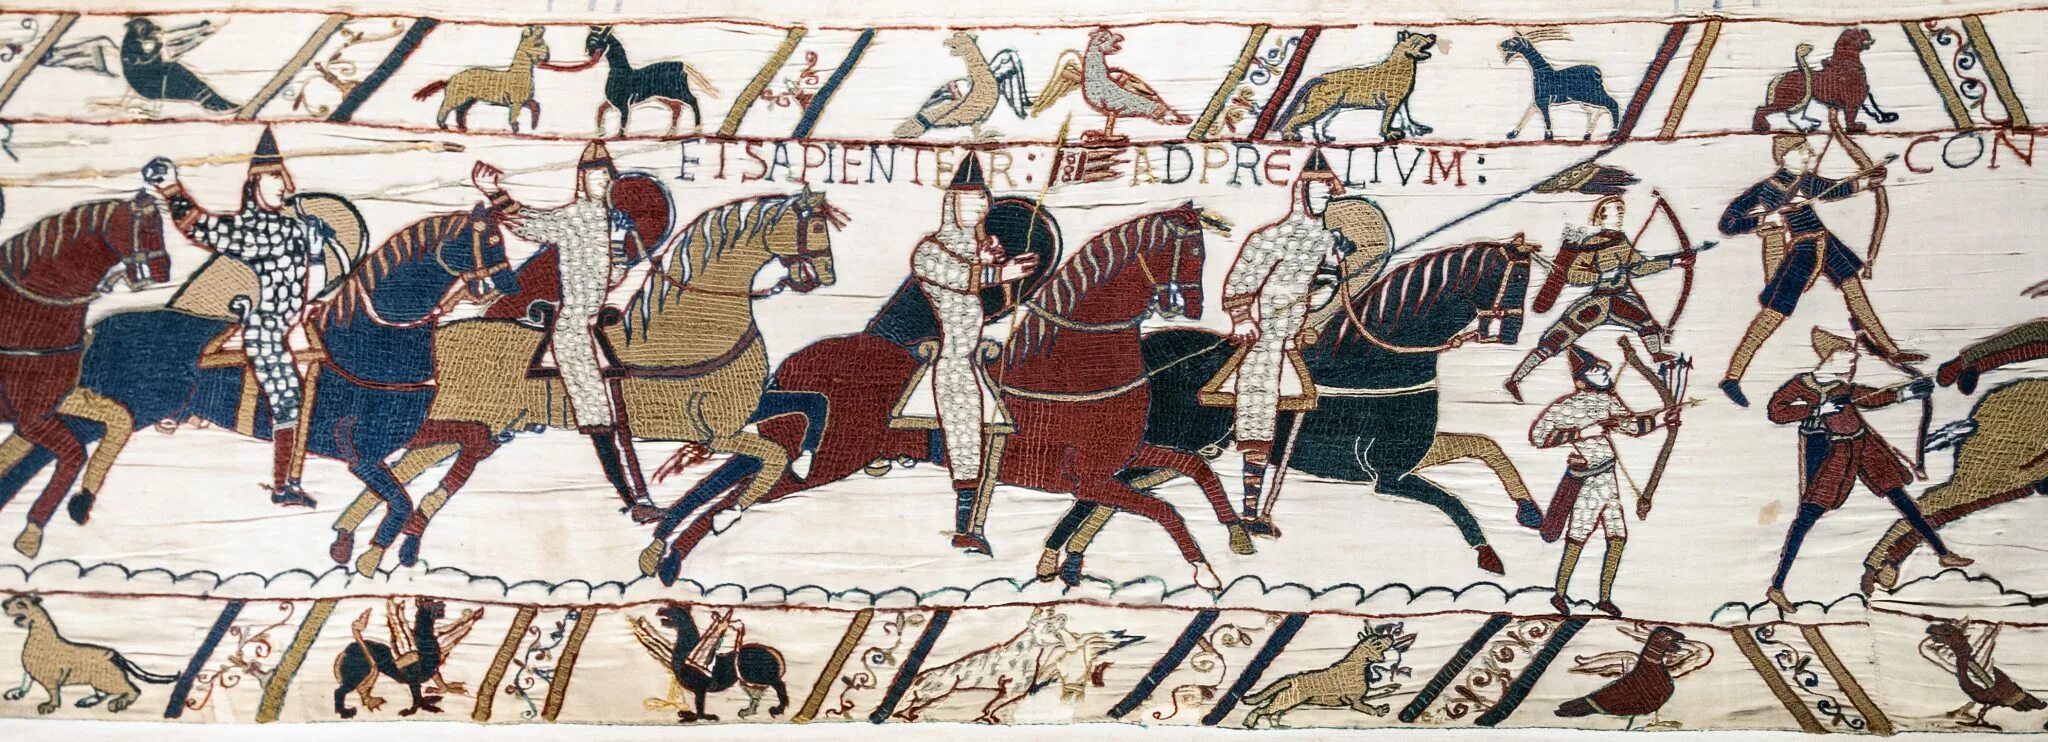 Xi вв. Битва при Гастингсе 1066 гобелен из Байе. Гобелен из байё битва при Гастингсе.